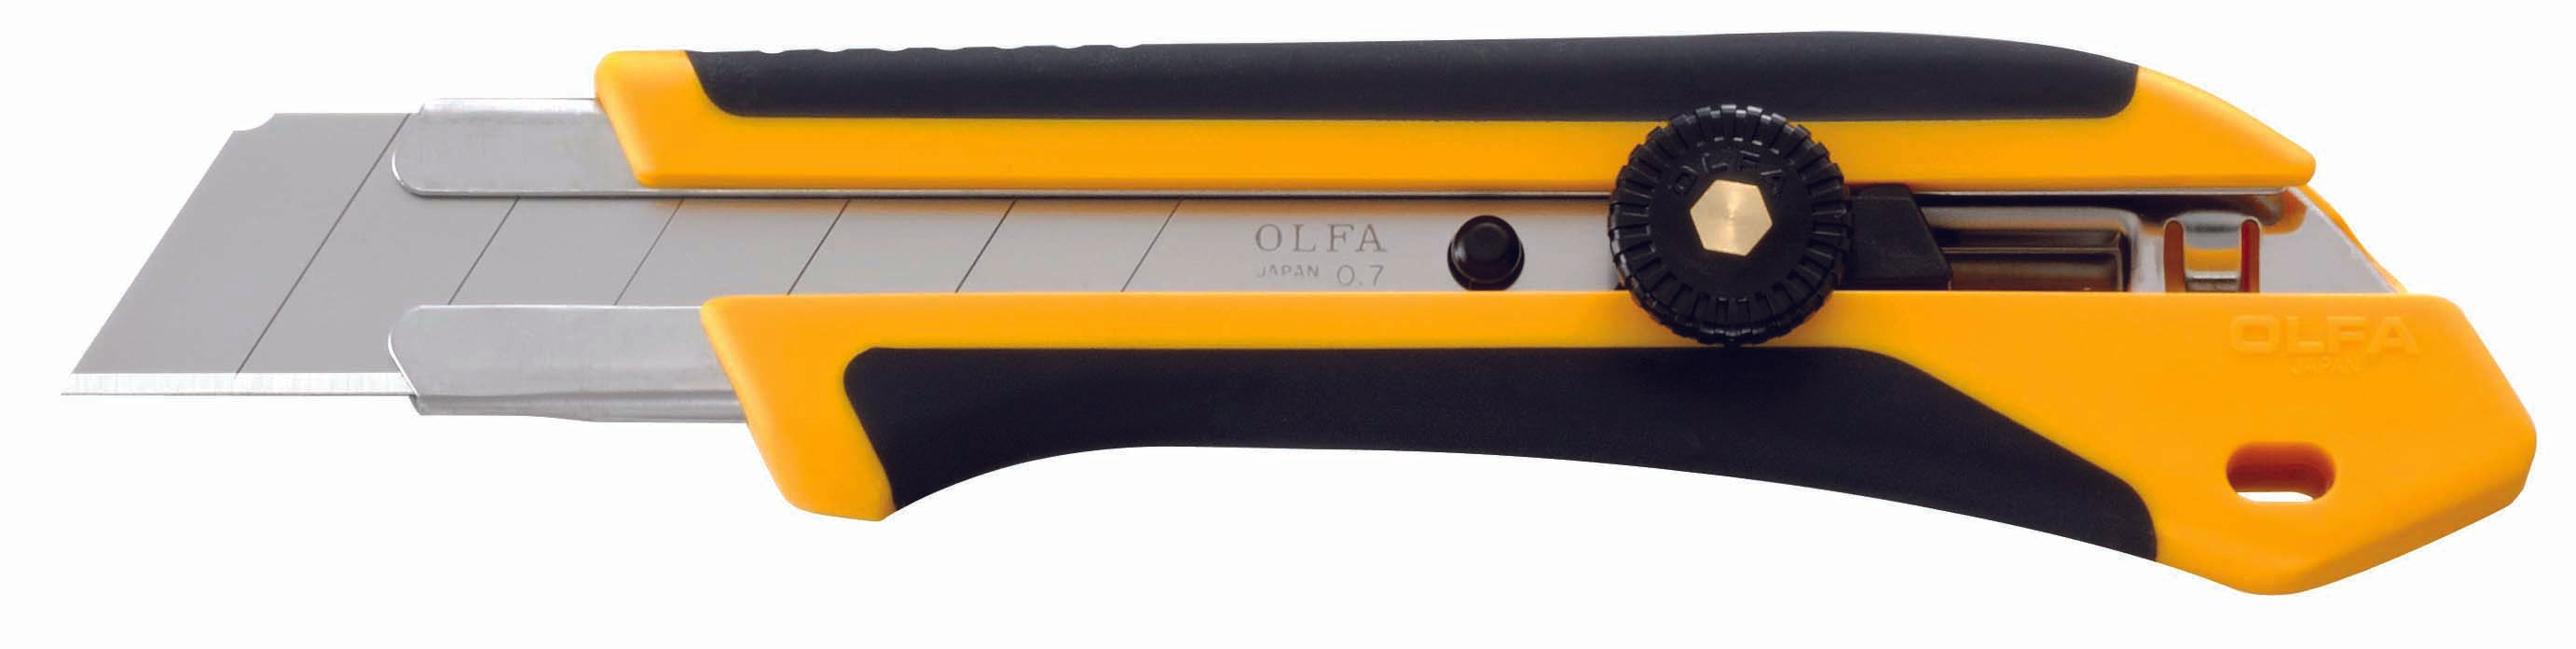 olfa-olfa-extra-heavy-duty--cutter-xh-1-25mm-x-design-series-snap-off-knife-ctr-xh1-2